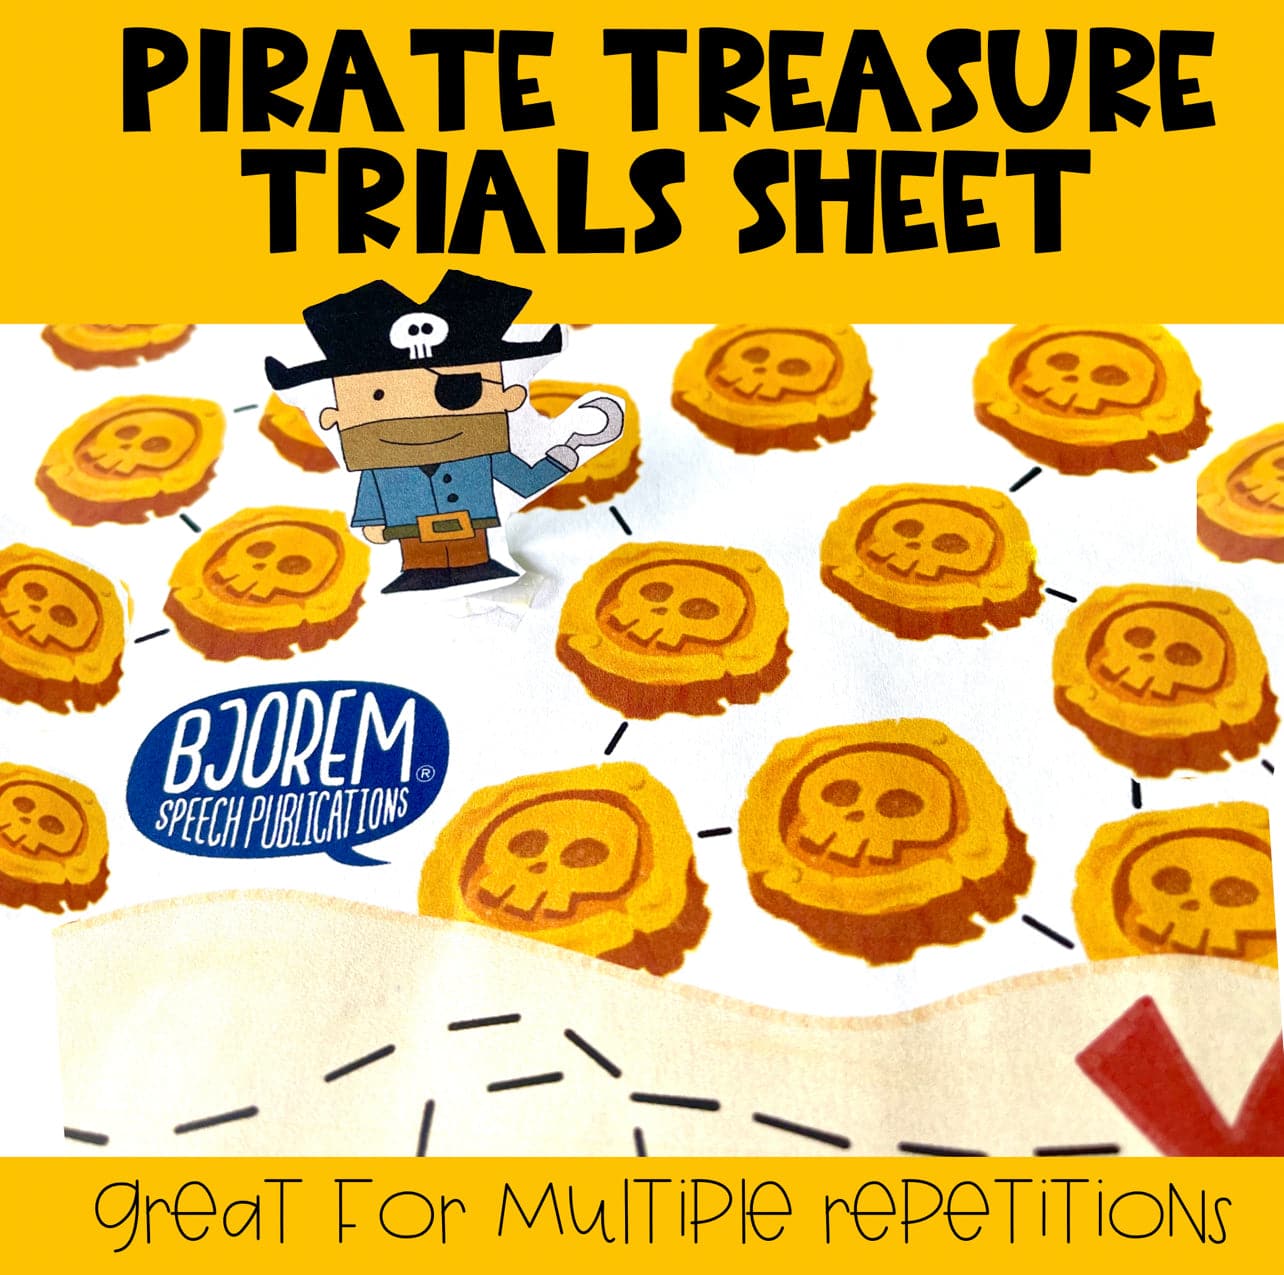 Pirate Treasure Trials Sheet - Download